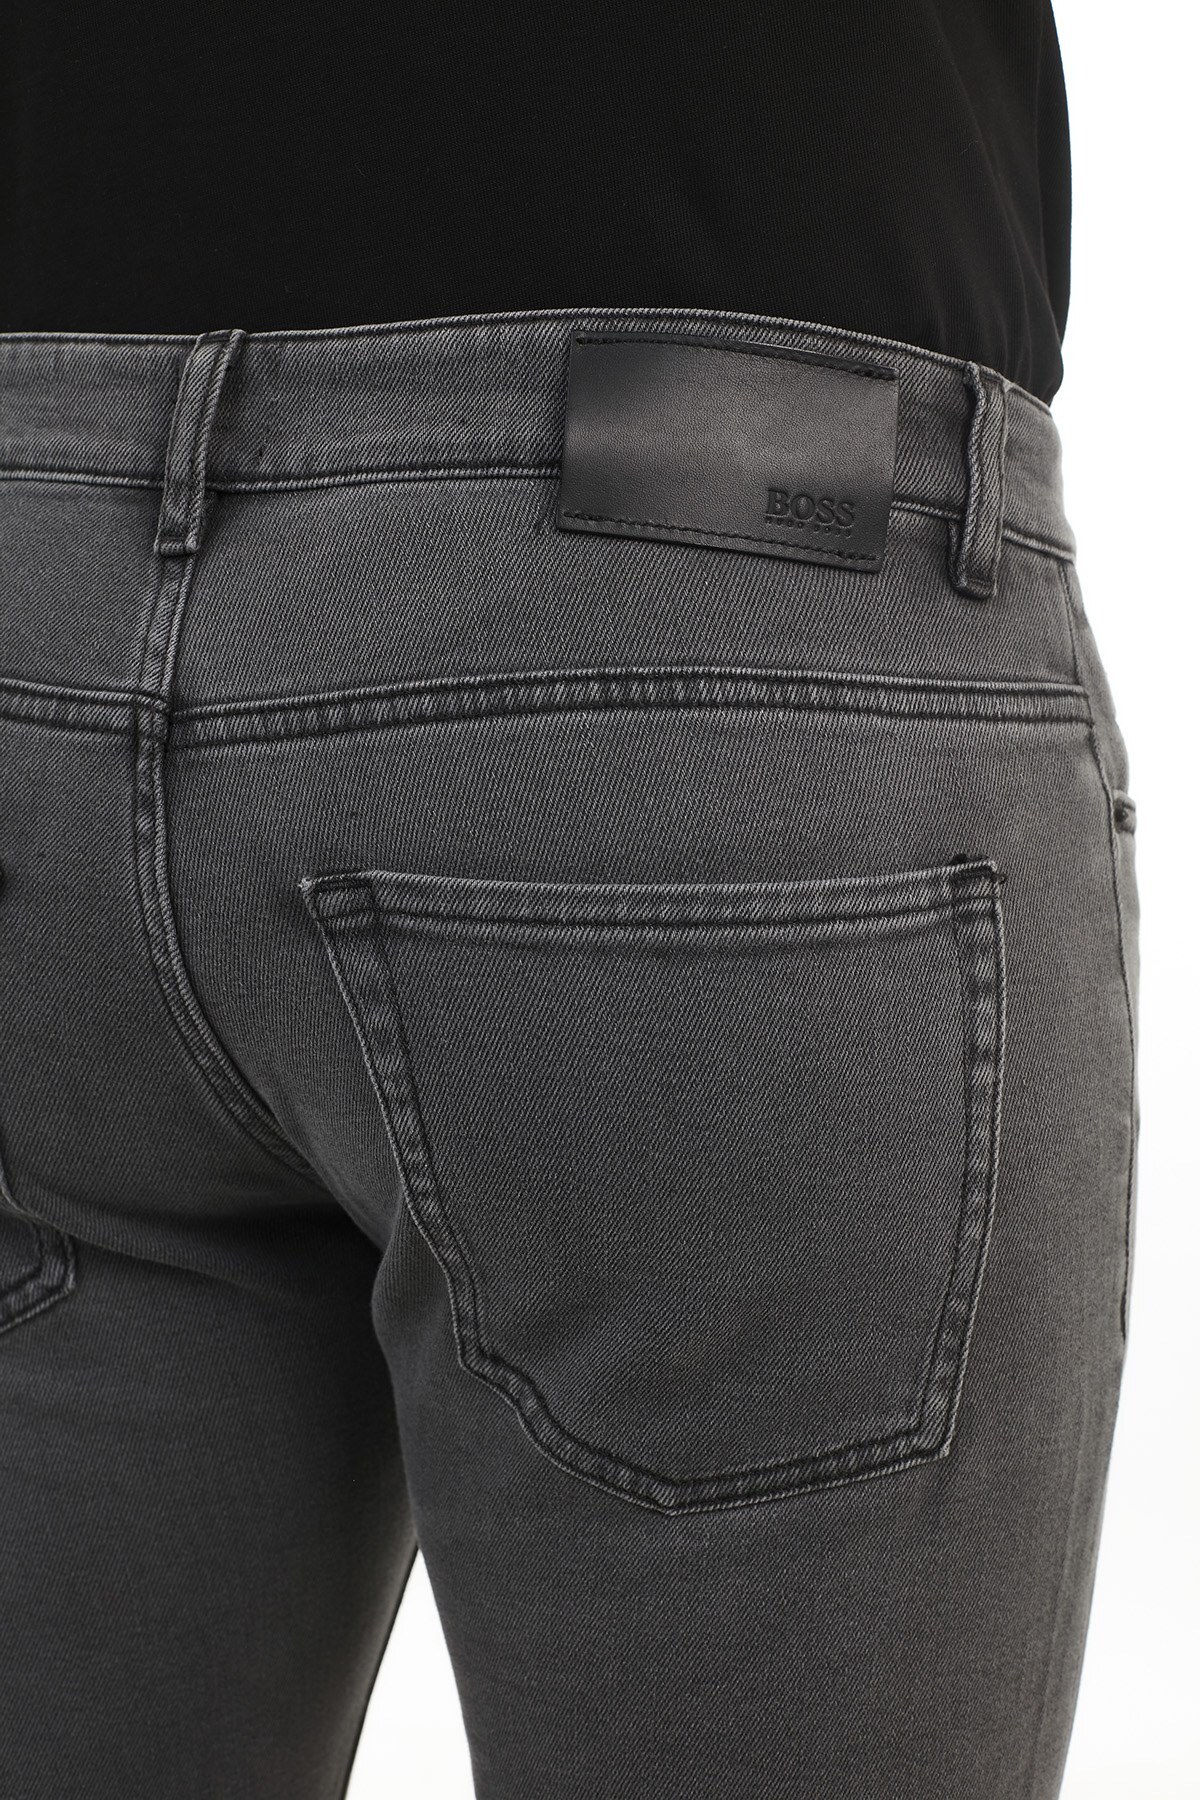 Hugo Boss Slim Fit Pamuklu Jeans Erkek Kot Pantolon 50443988 019 GRİ